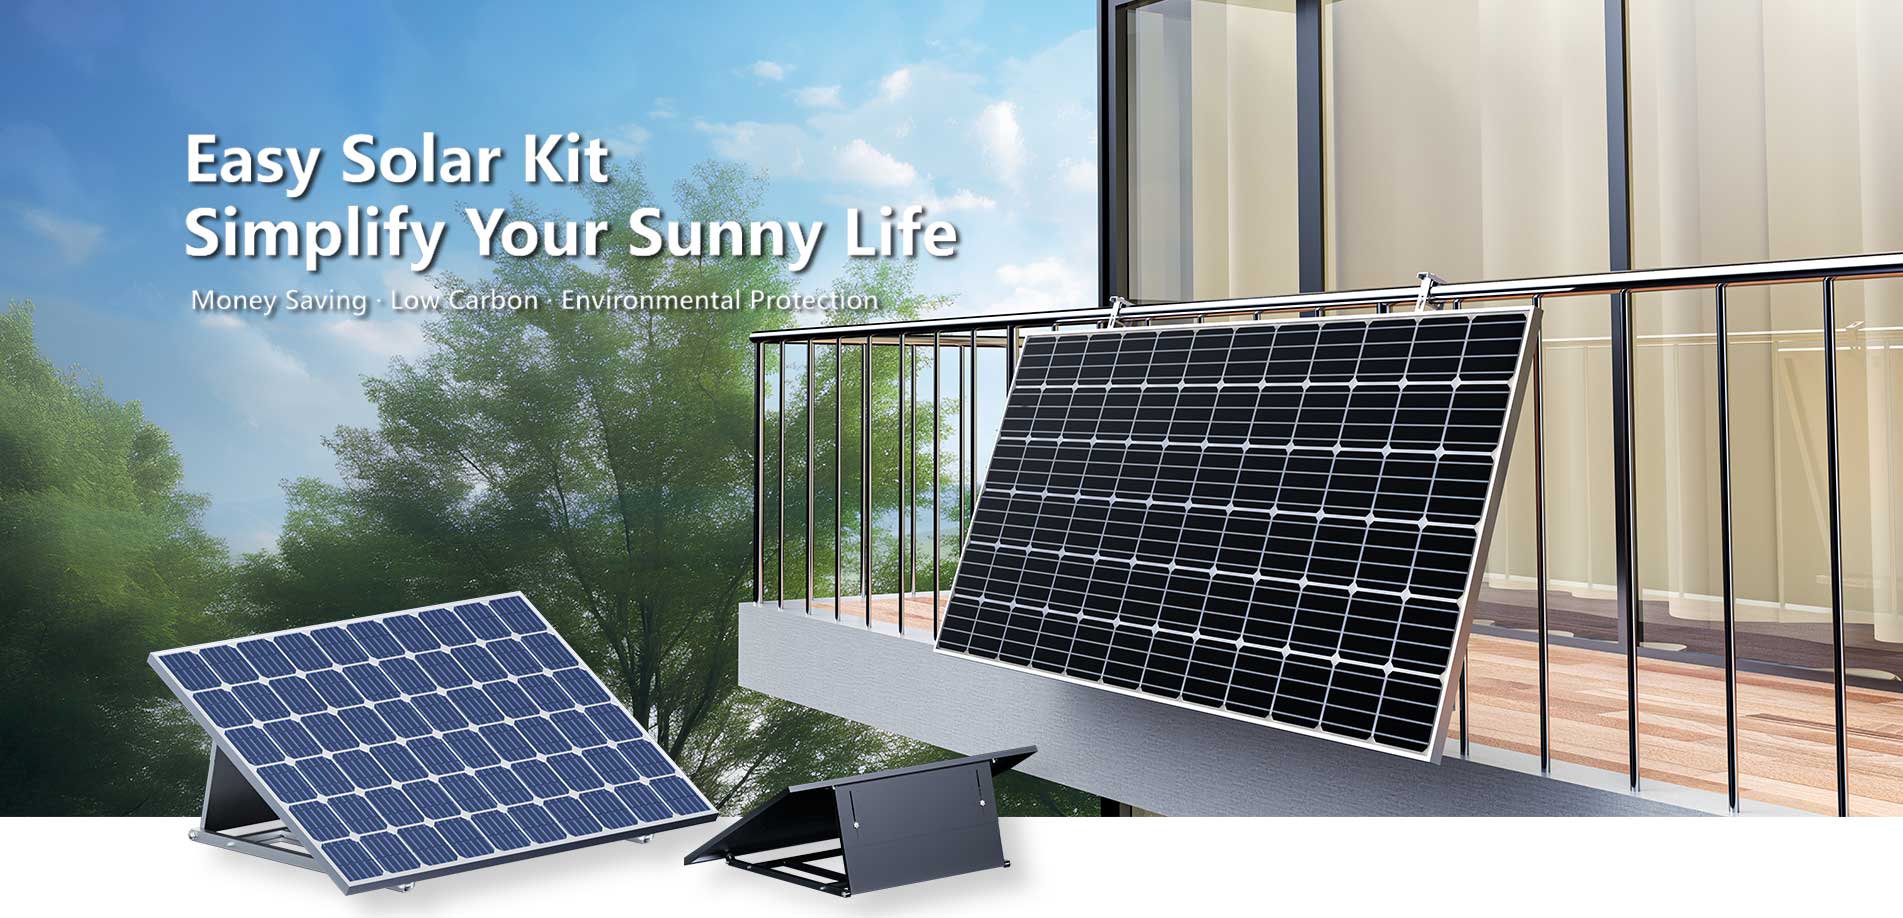 Easy solar kit system